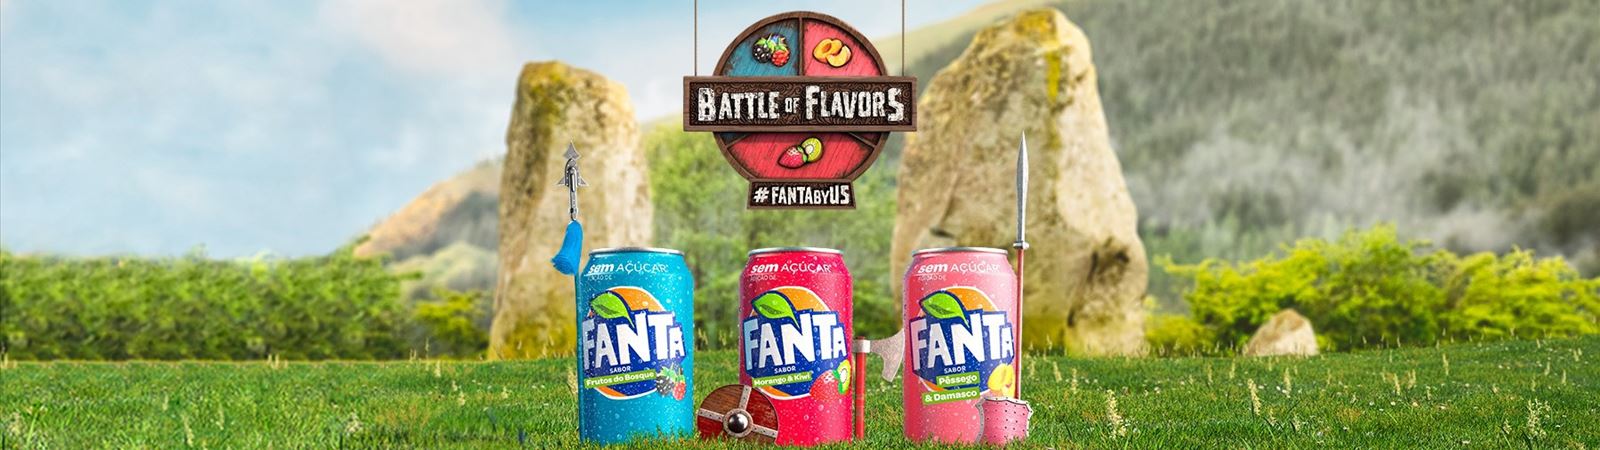 Battle of Flavors